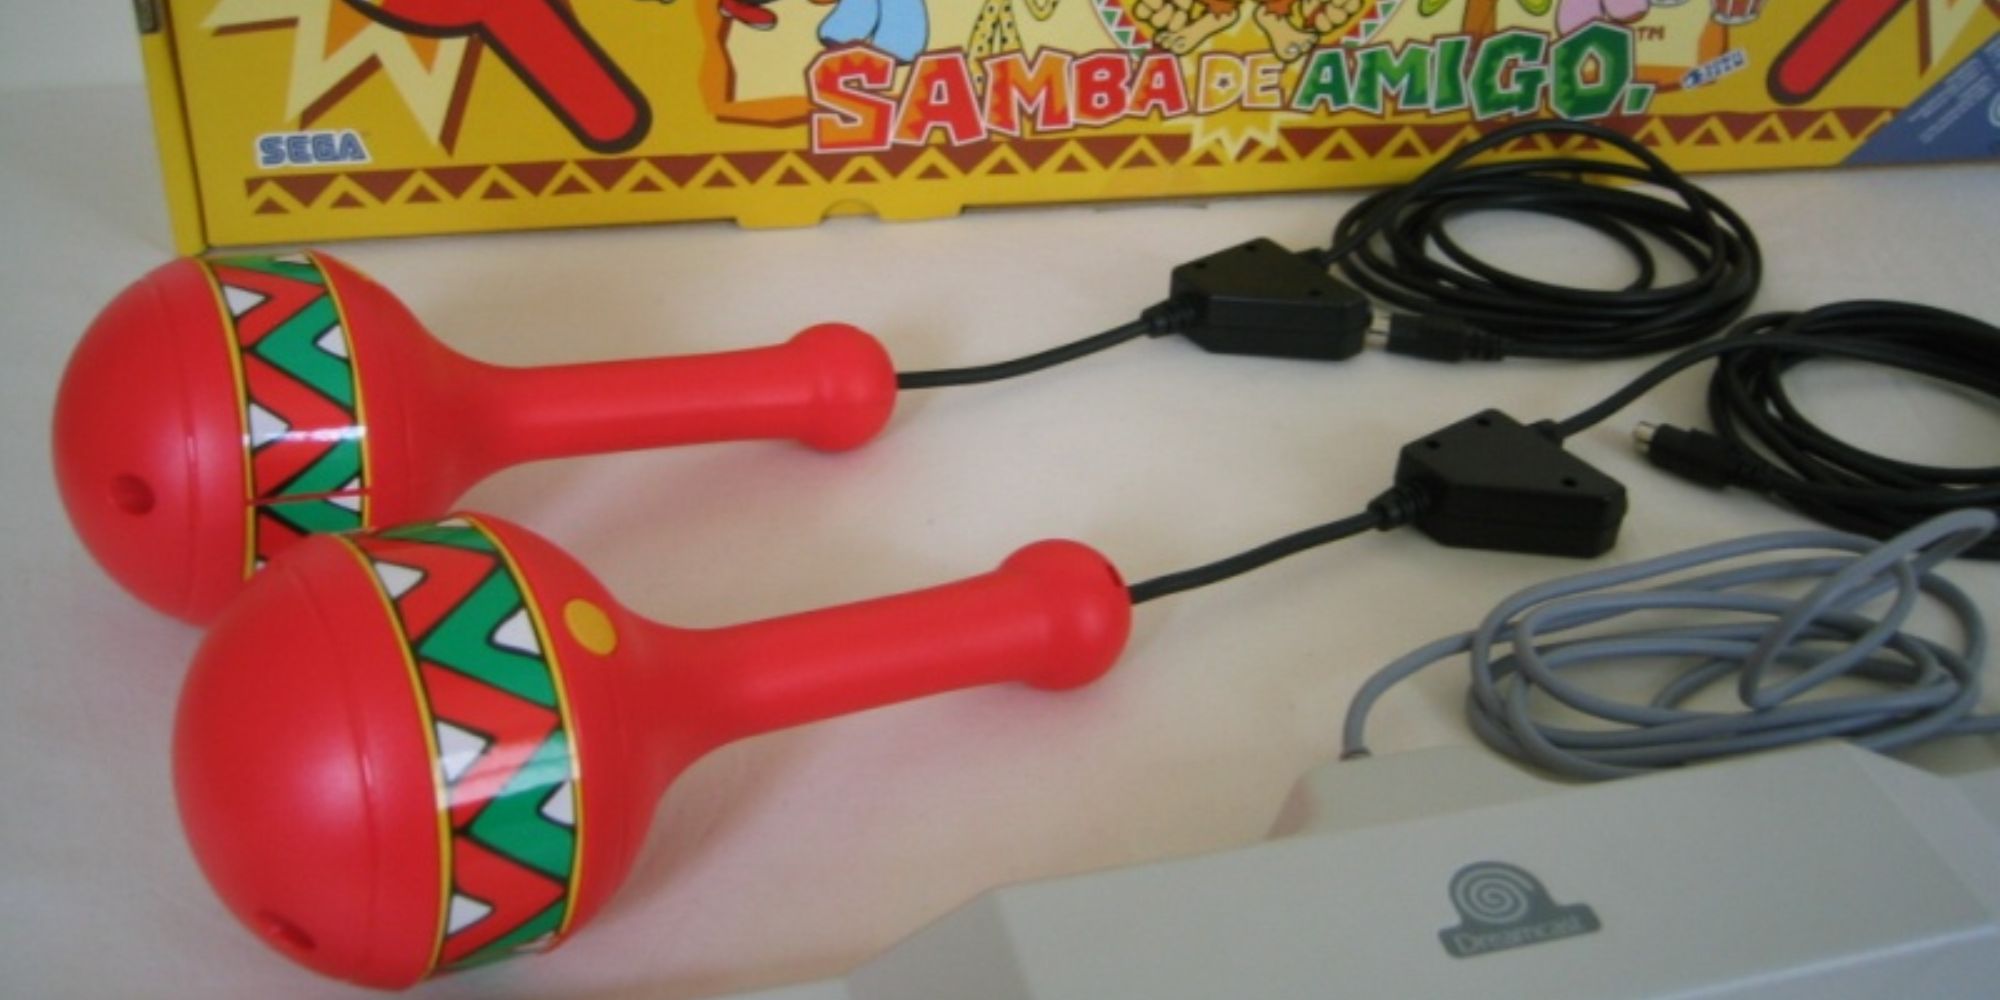 Samba De Amibo Dreamcast Maracas with cables and box